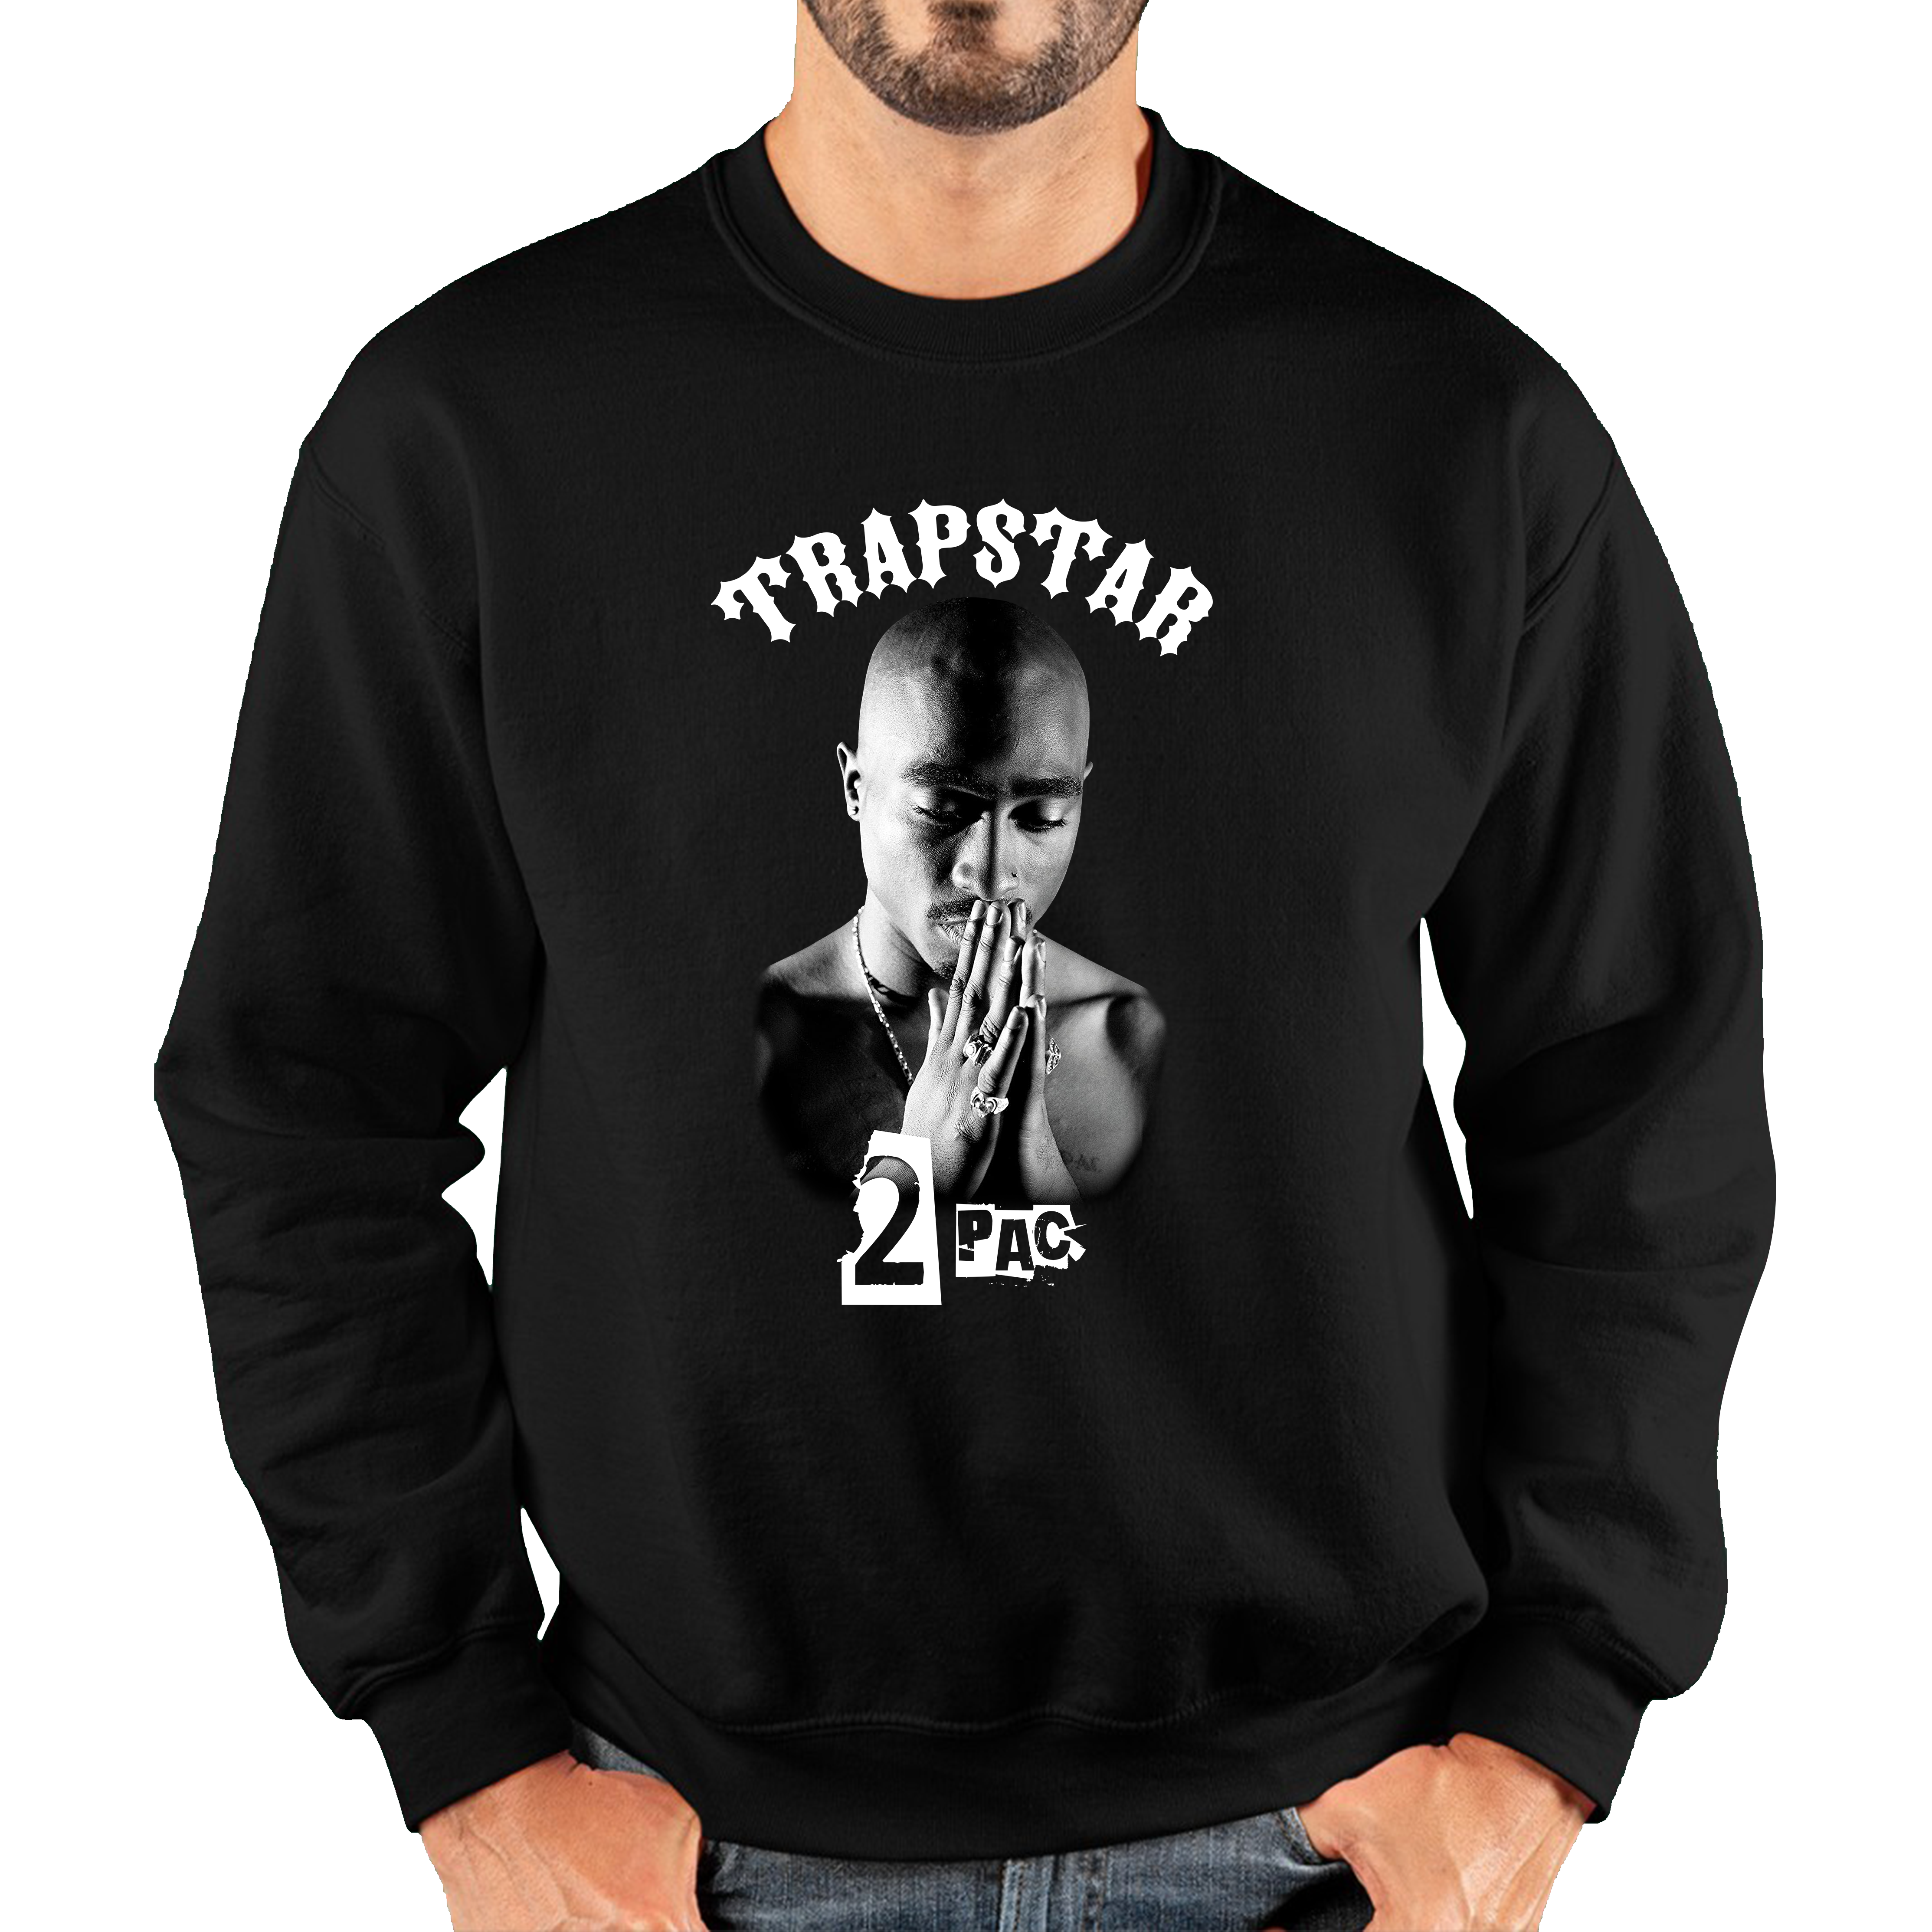 Trapstar 2pac Jumper Tupac Shakur American Rapper Hip Hop Lovers Music Gift Mens Sweatshirt